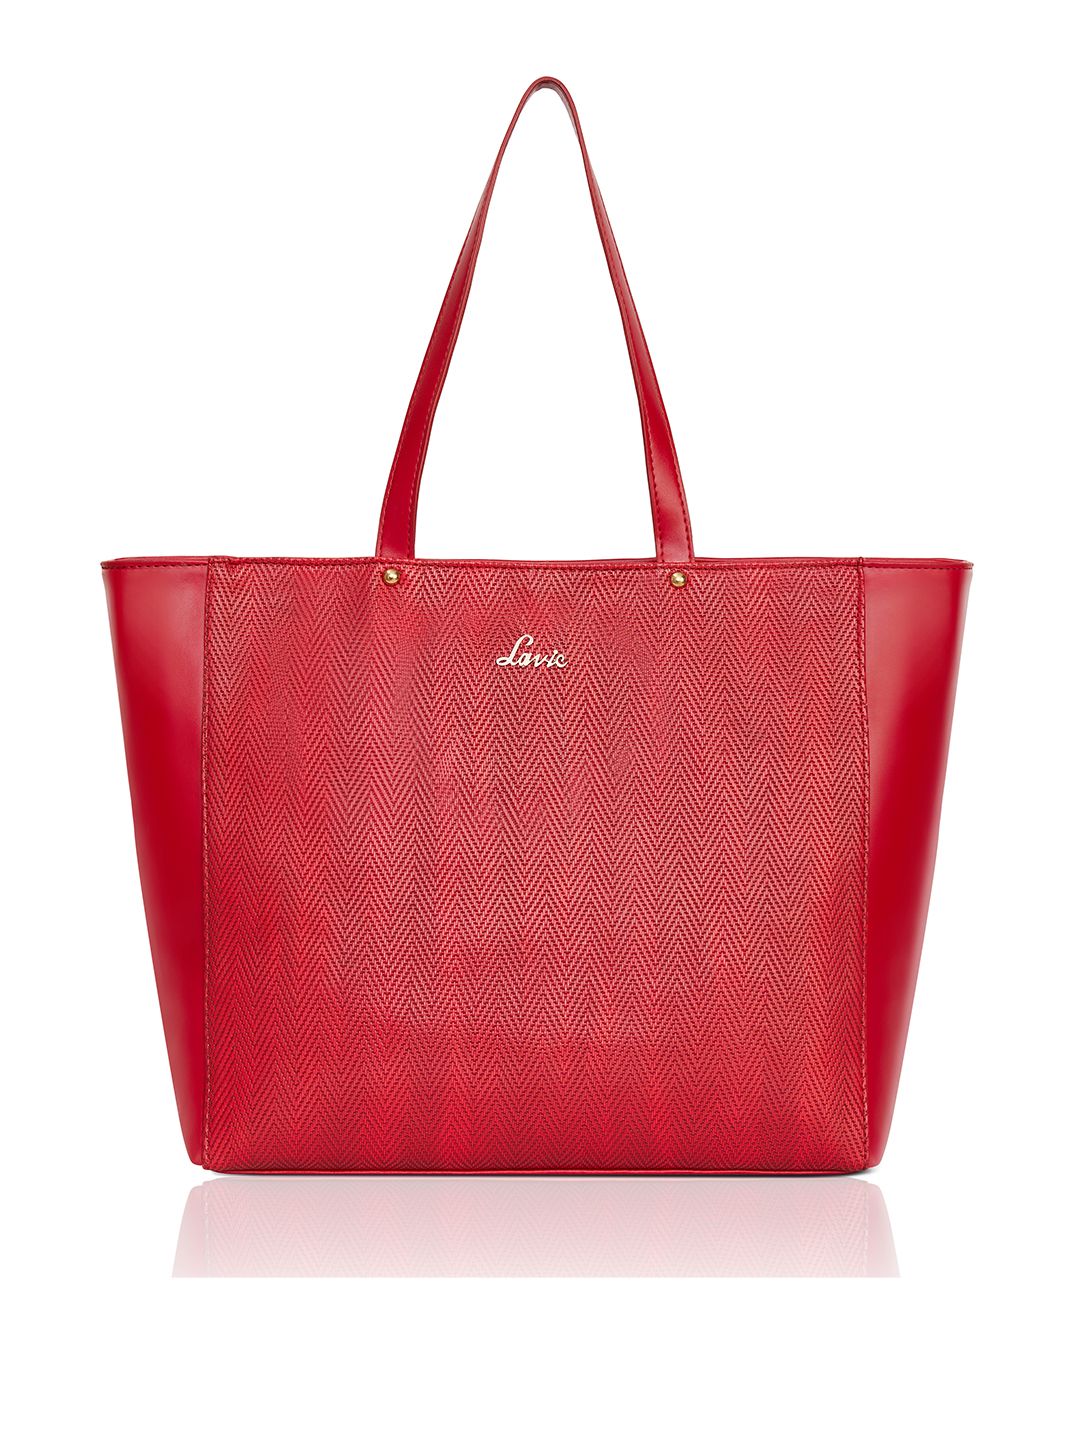 Lavie Red Textured Shoulder Bag Price in India